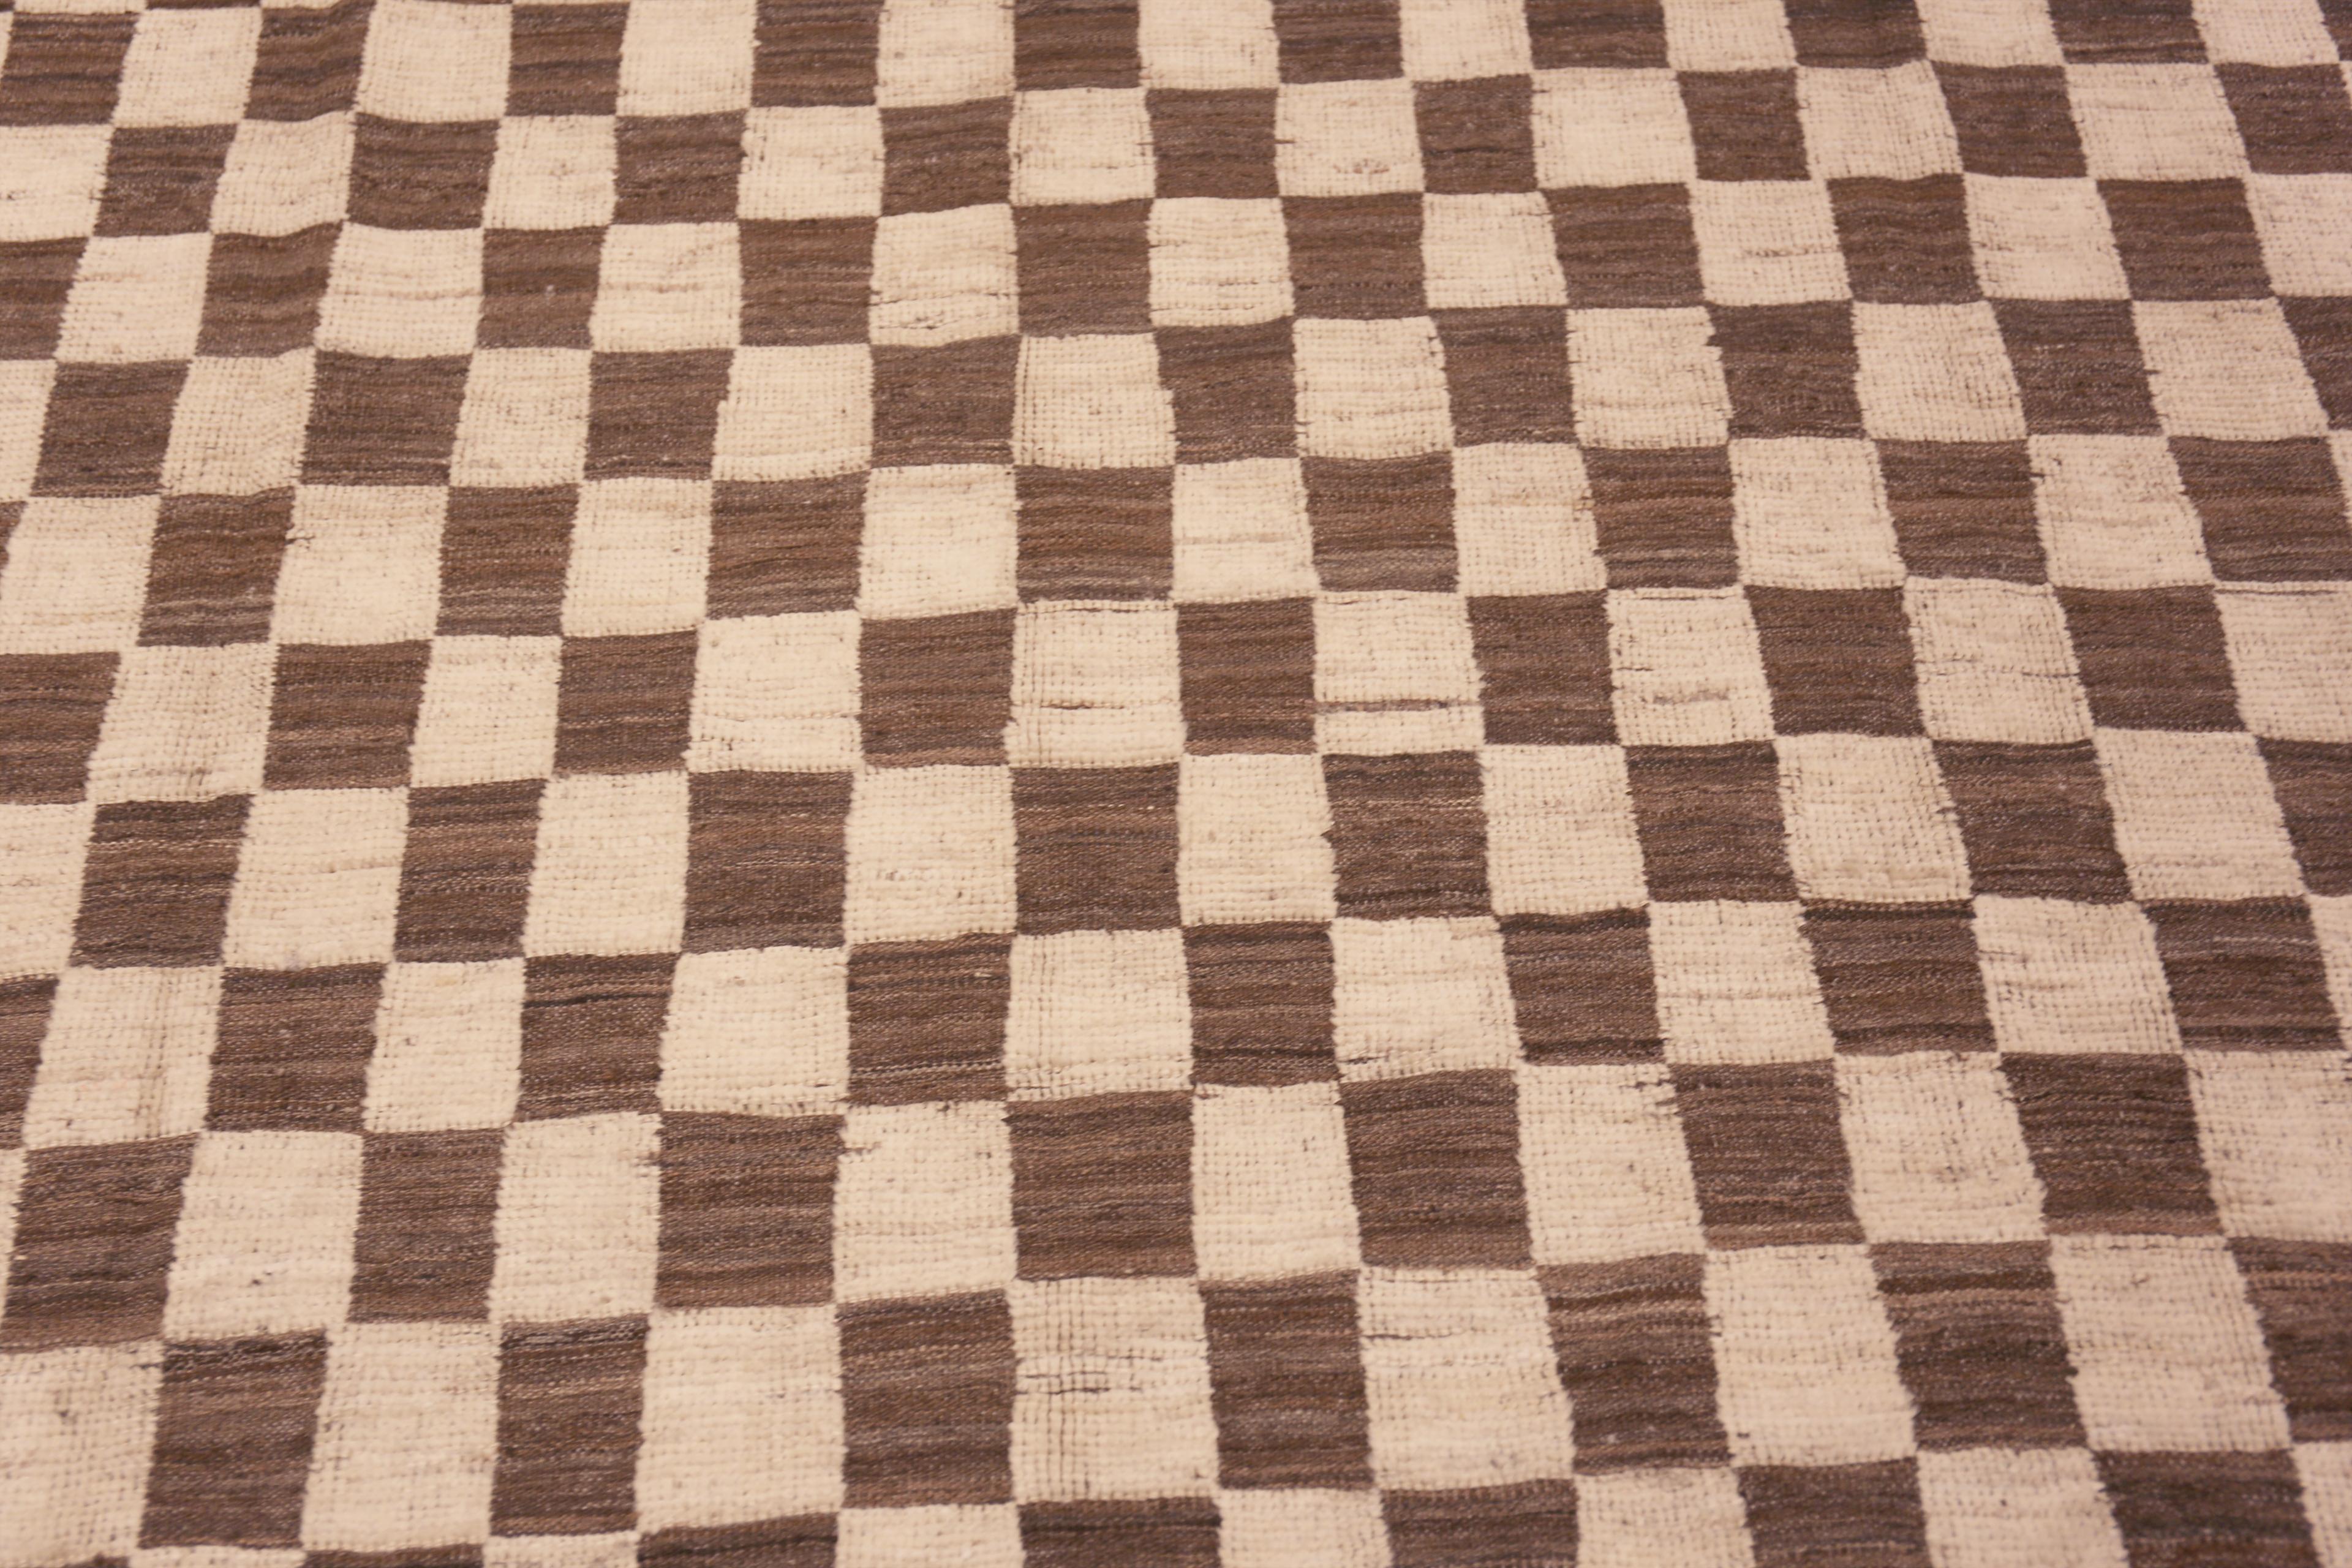 Central Asian Nazmiyal Collection Modern Moroccan Checkerboard Design Area Rug 9'5